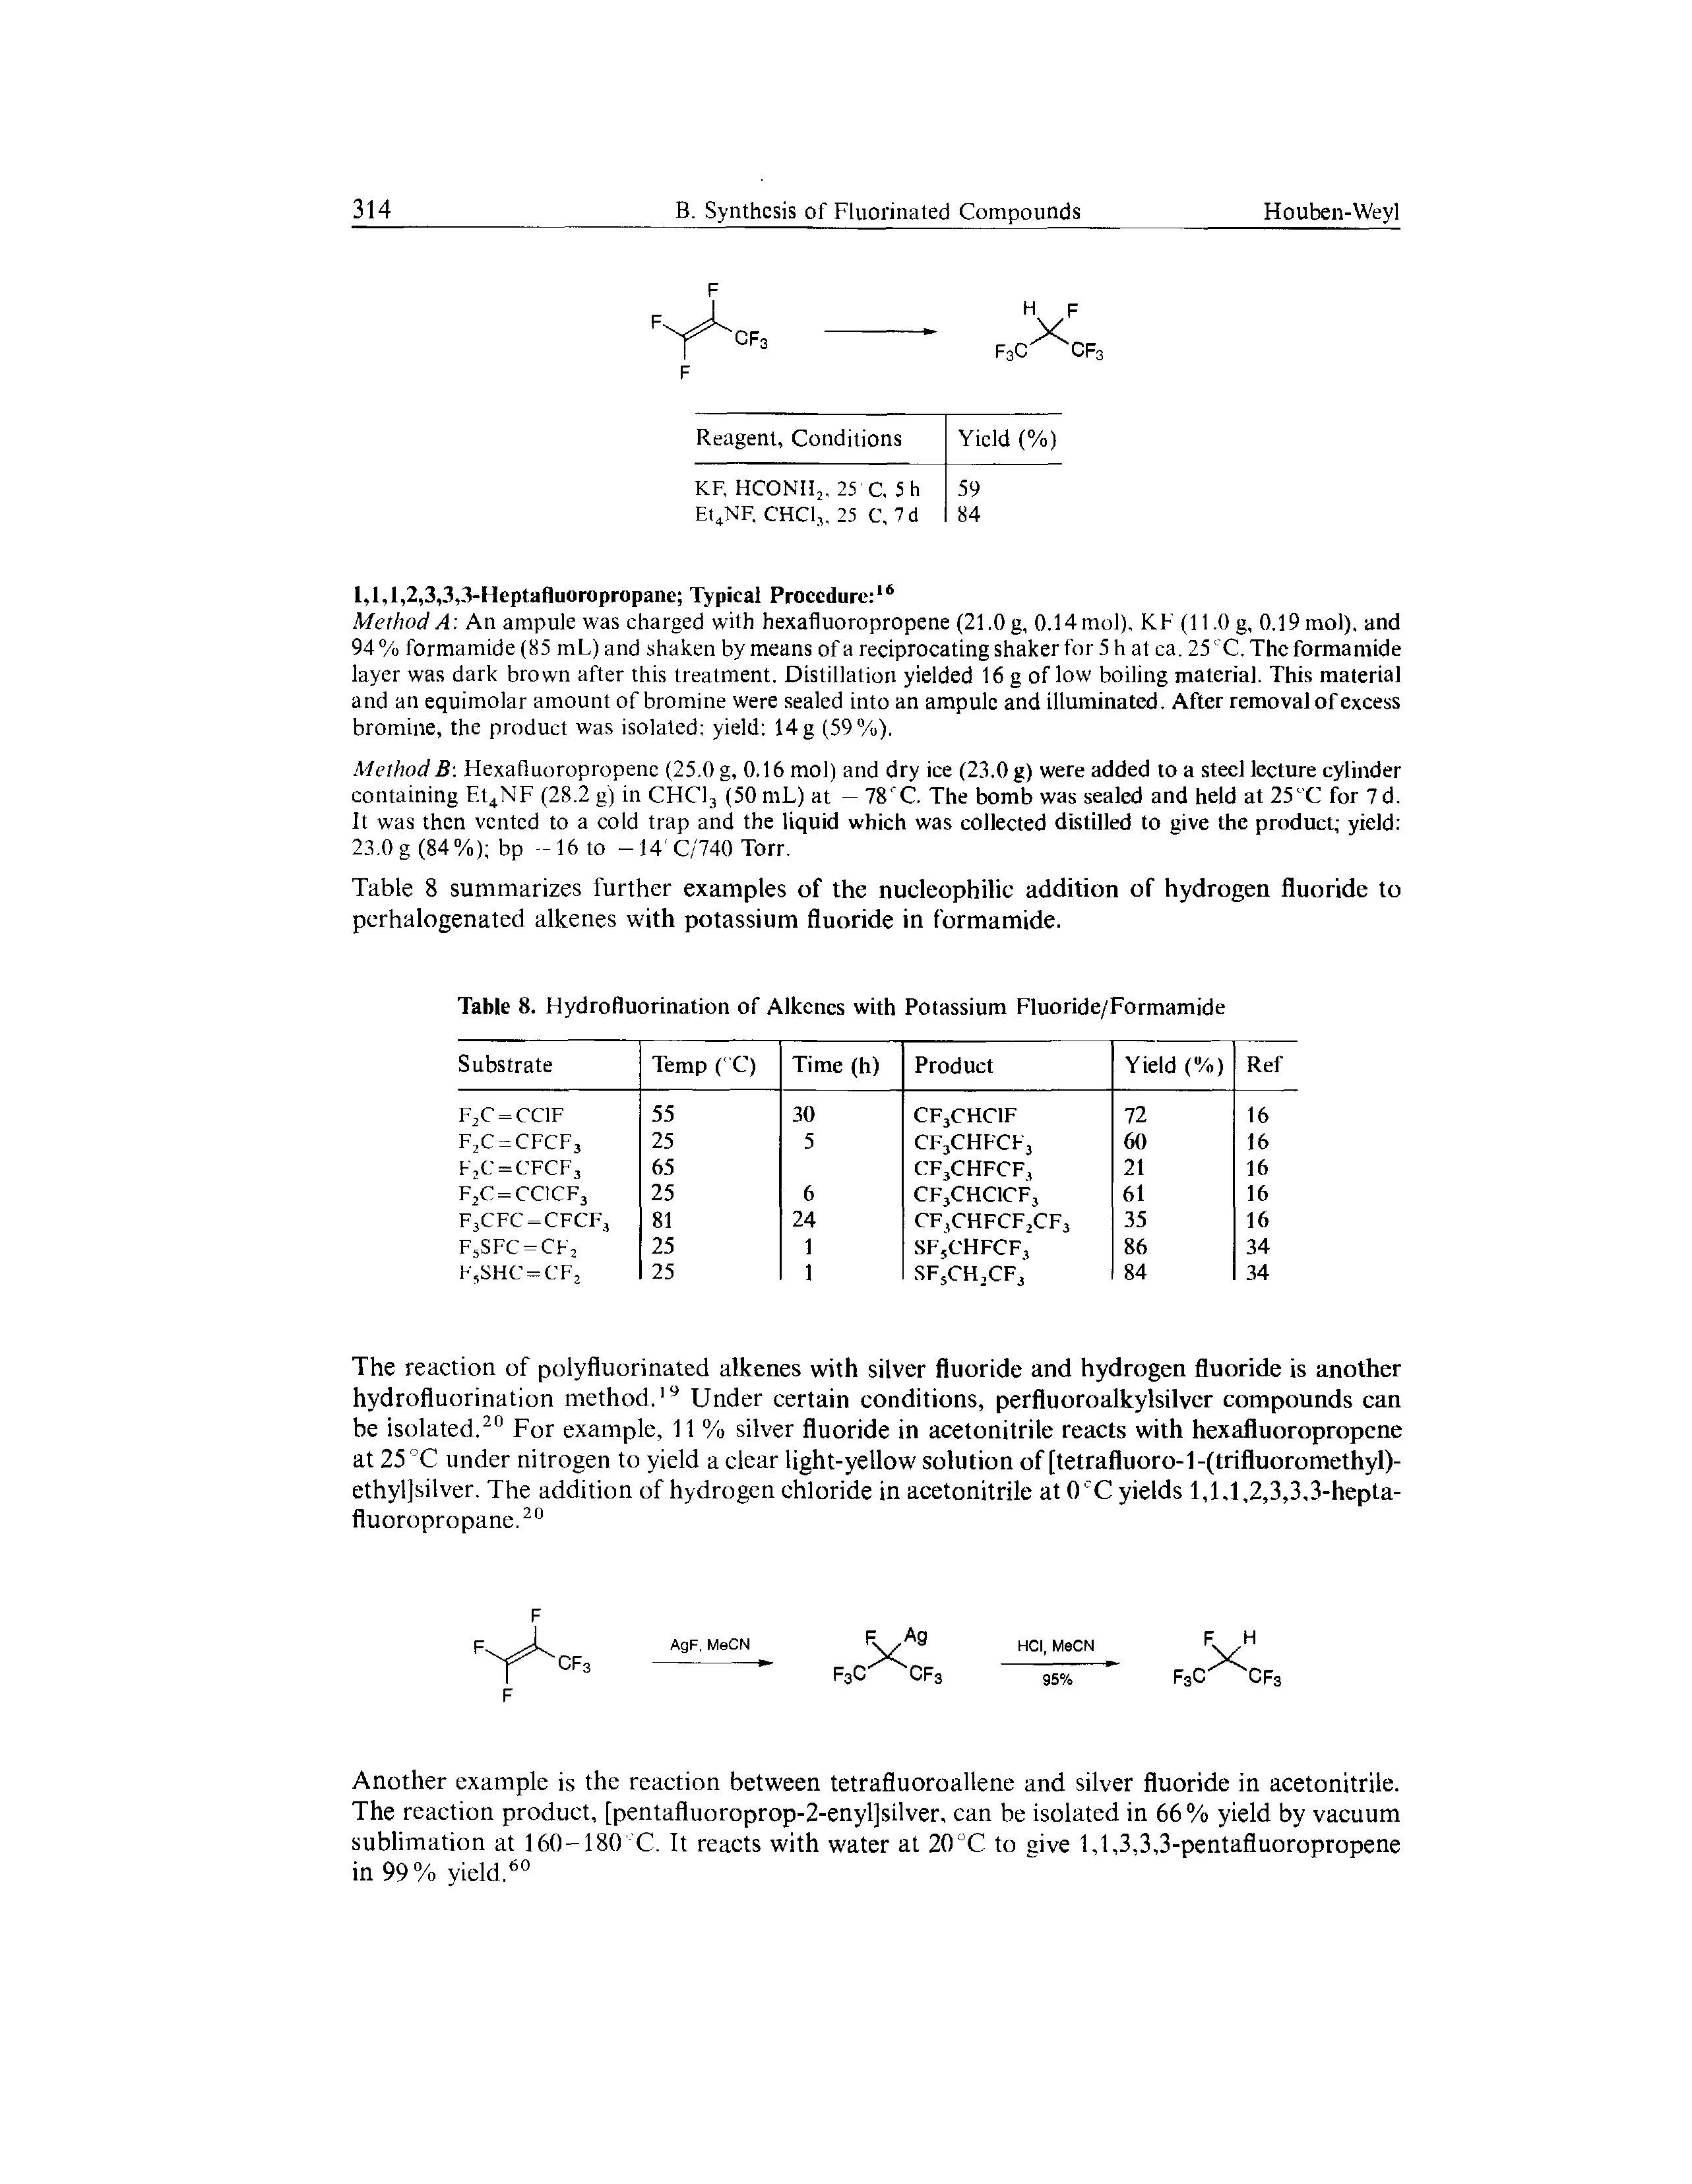 Table 8. Hydrofluorination of Alkenes with Potassium Fluoride/Formamide...